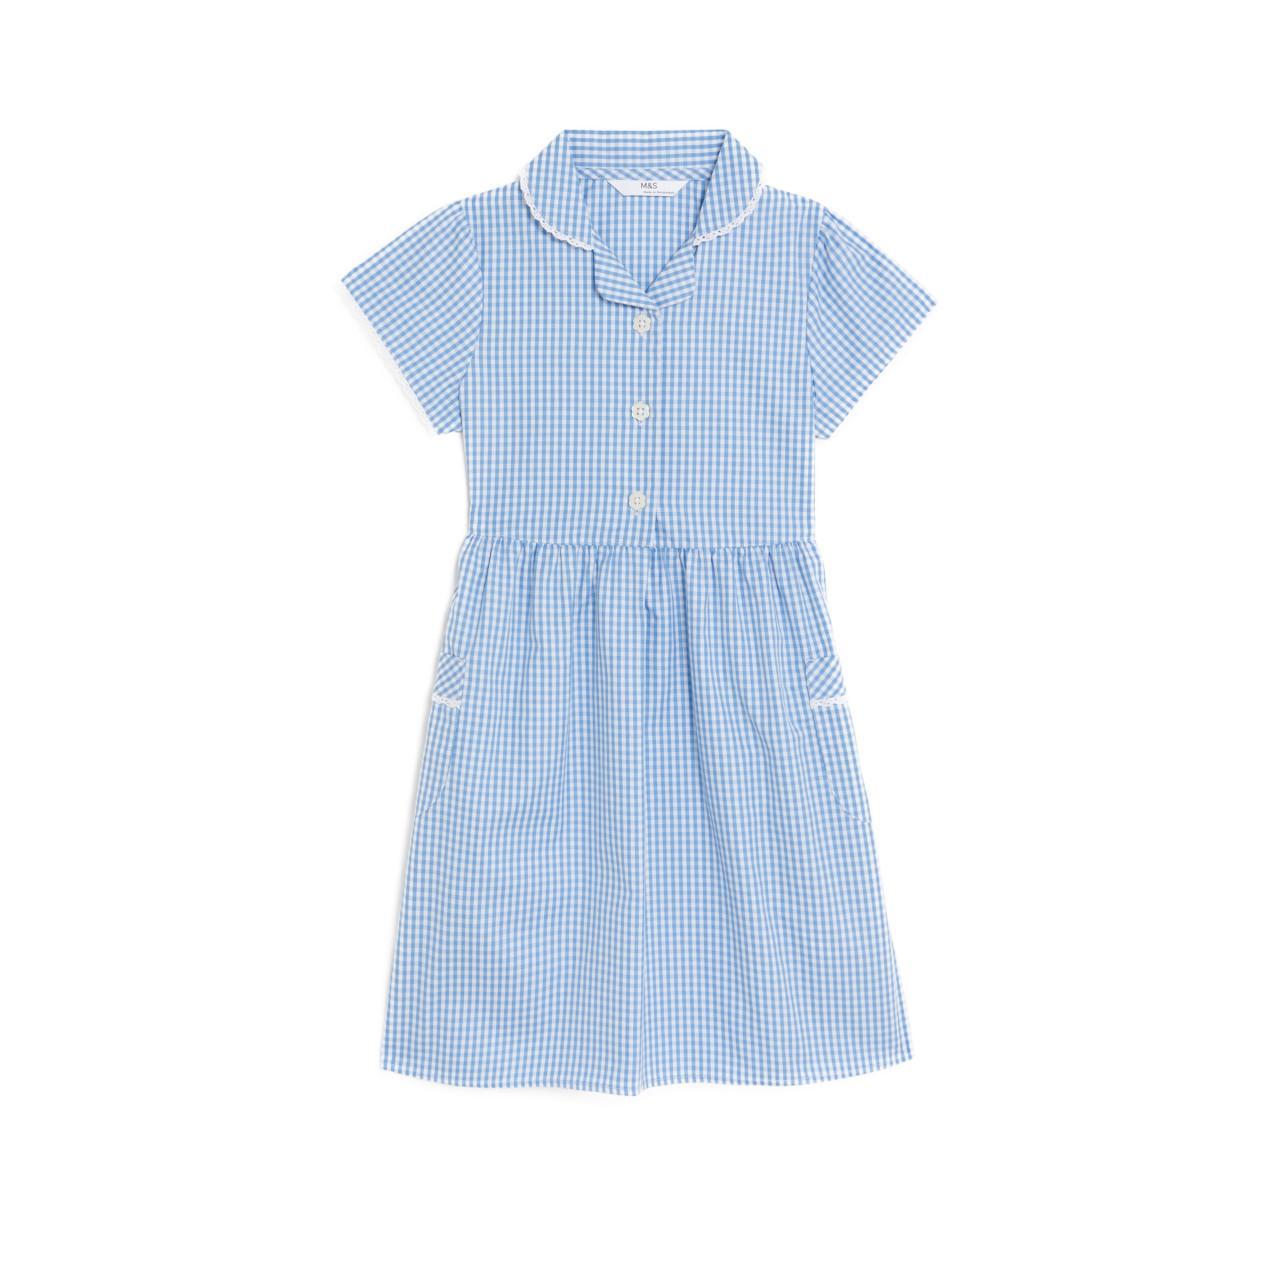 M&S Girls Pure Cotton Gingham School Dress, 4-5 Years, Light Blue